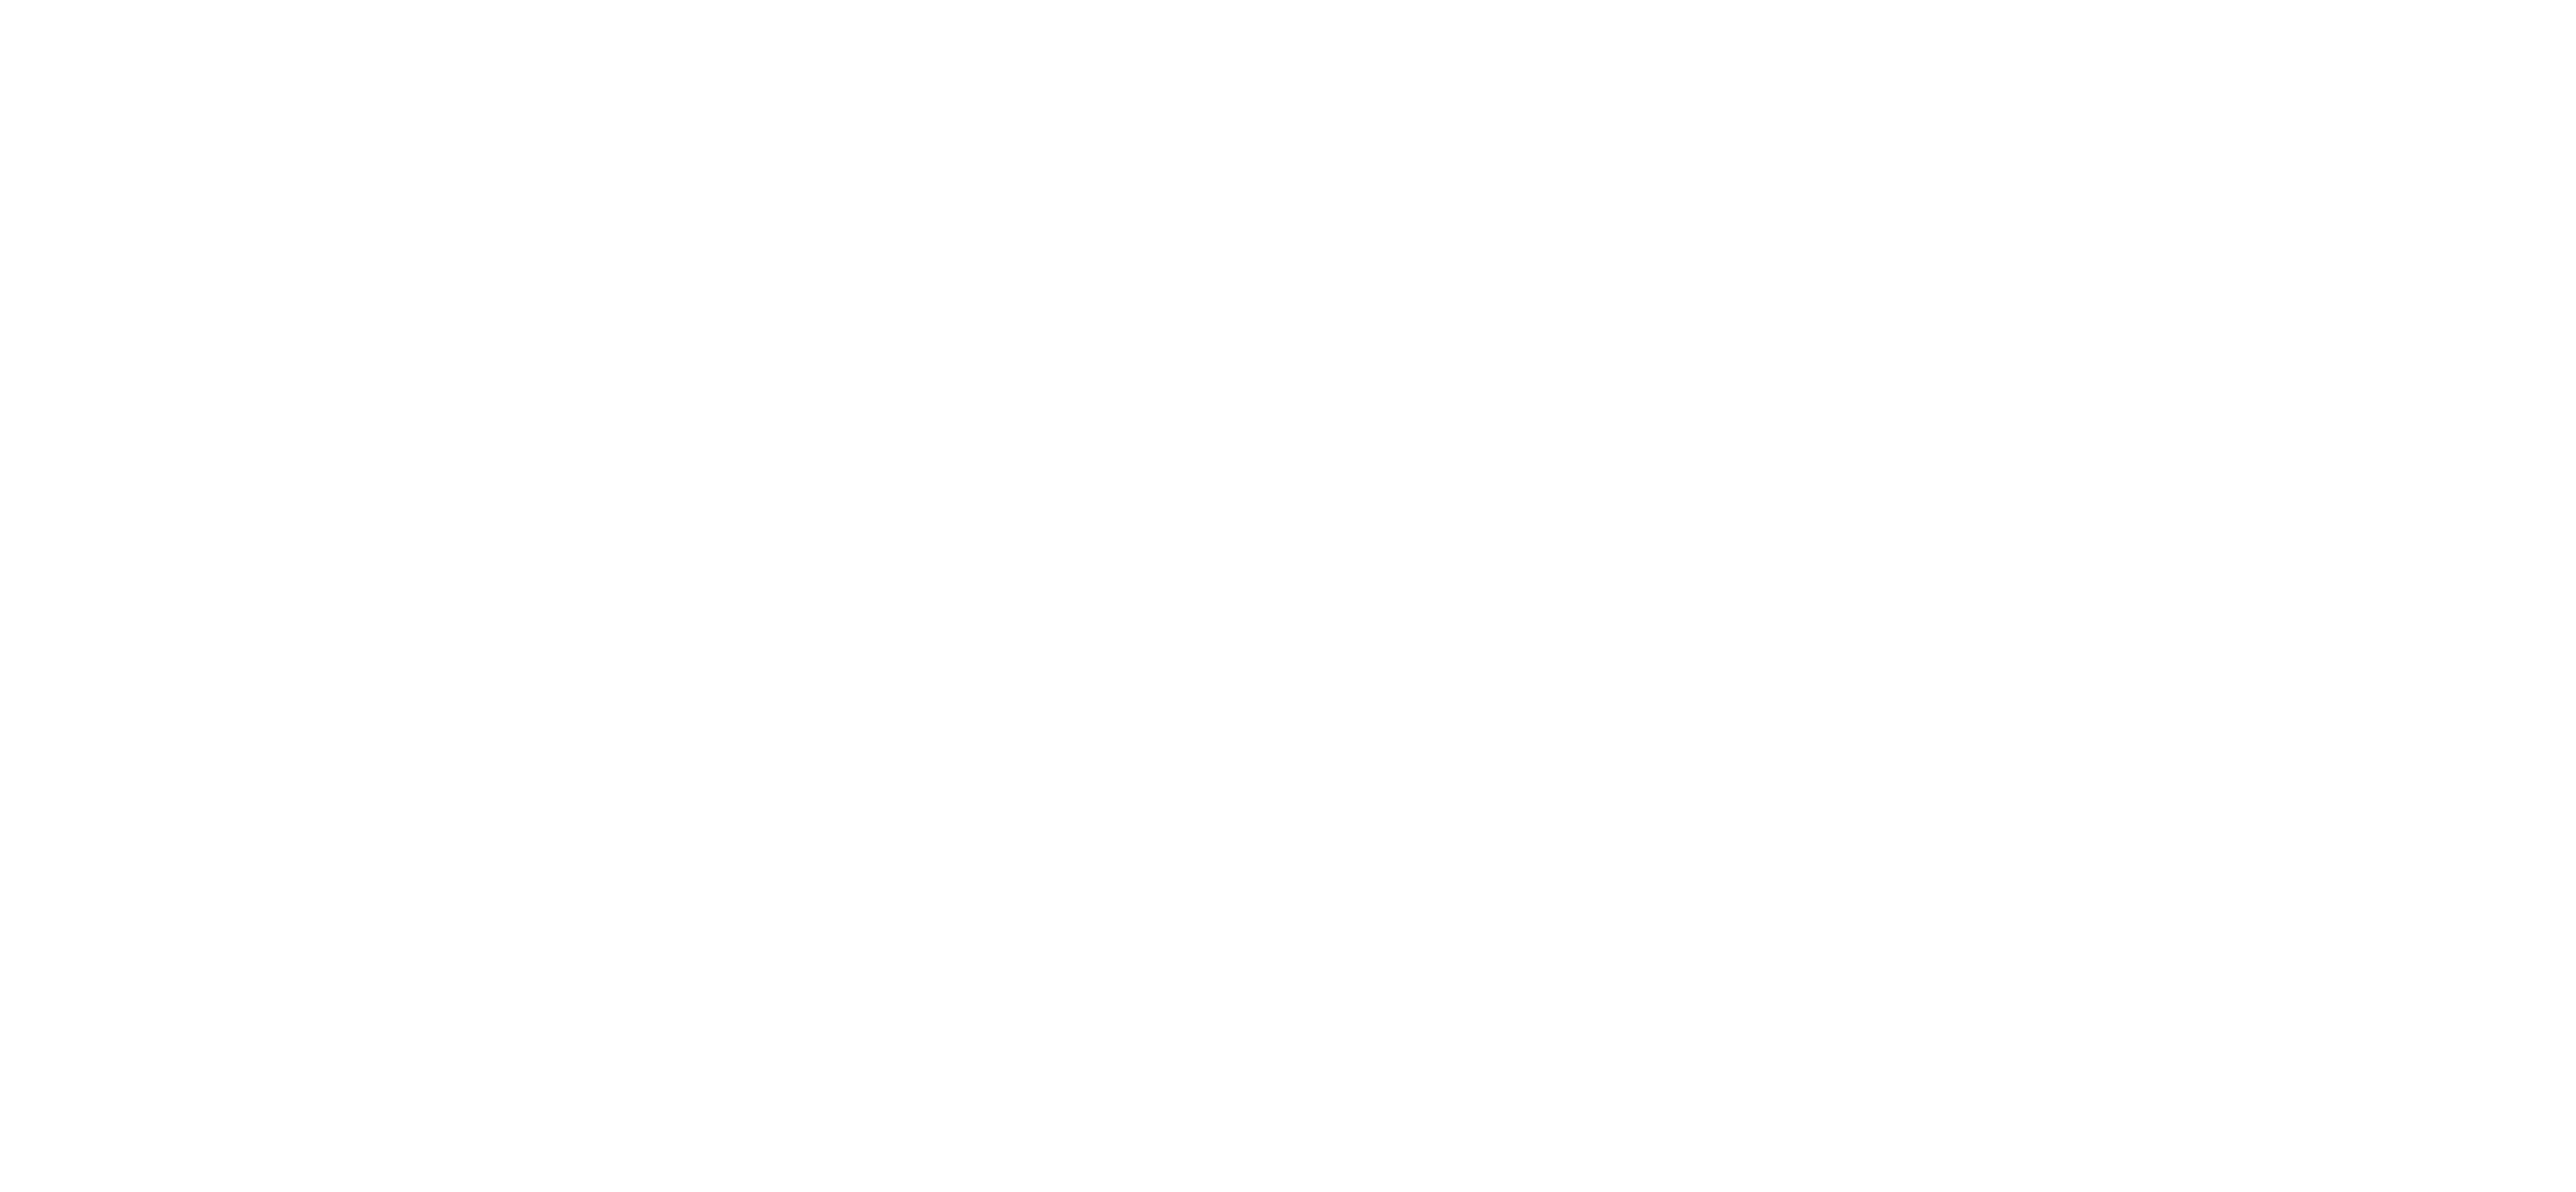 Yuhor logo